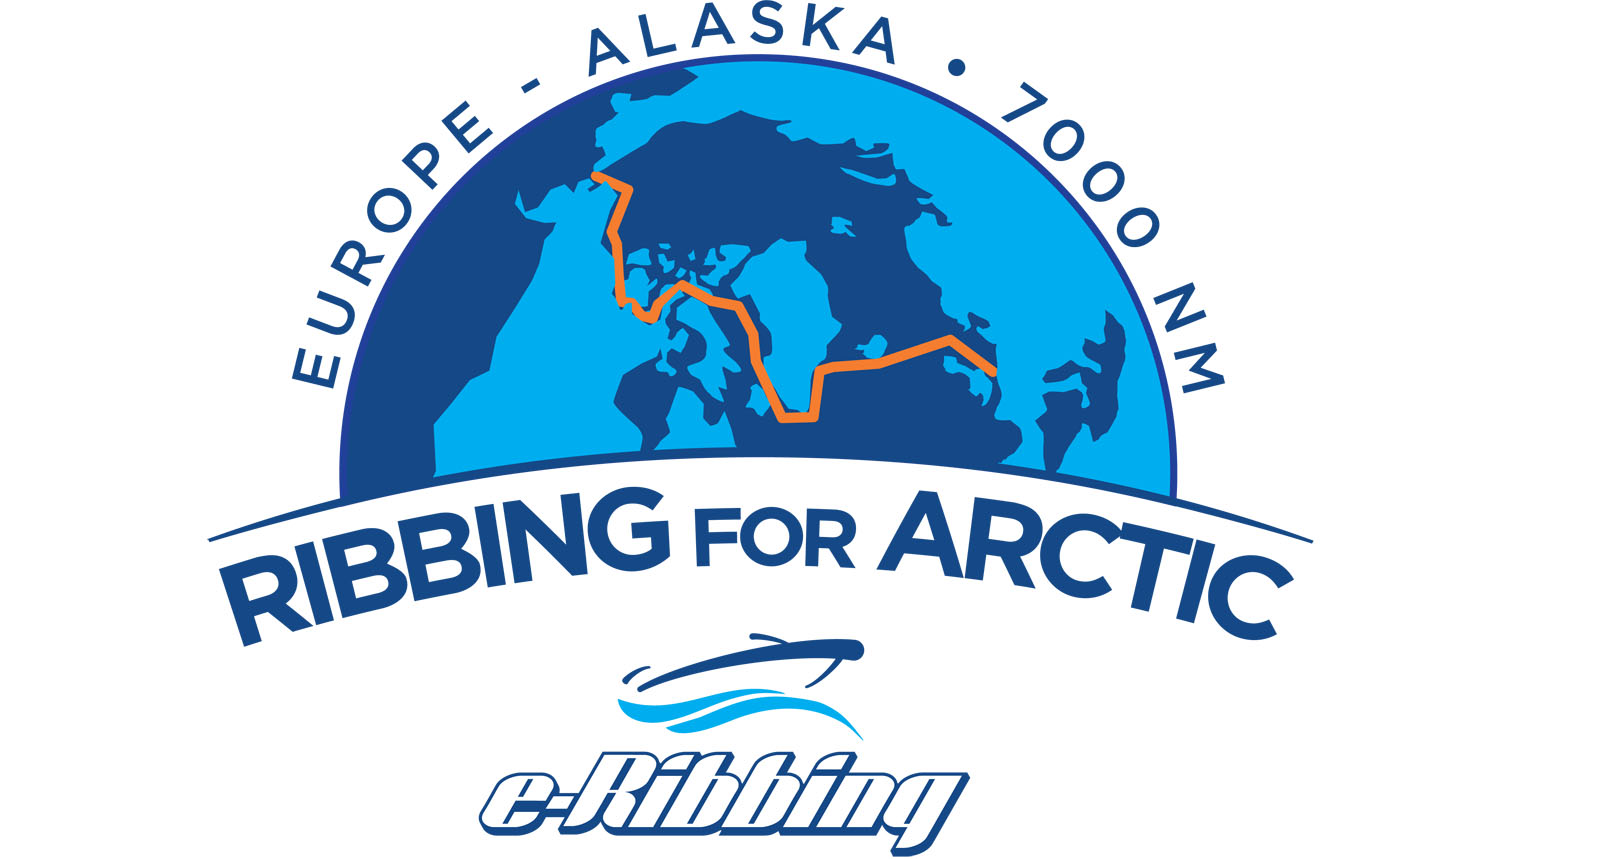 “Ribbing for Arctic”